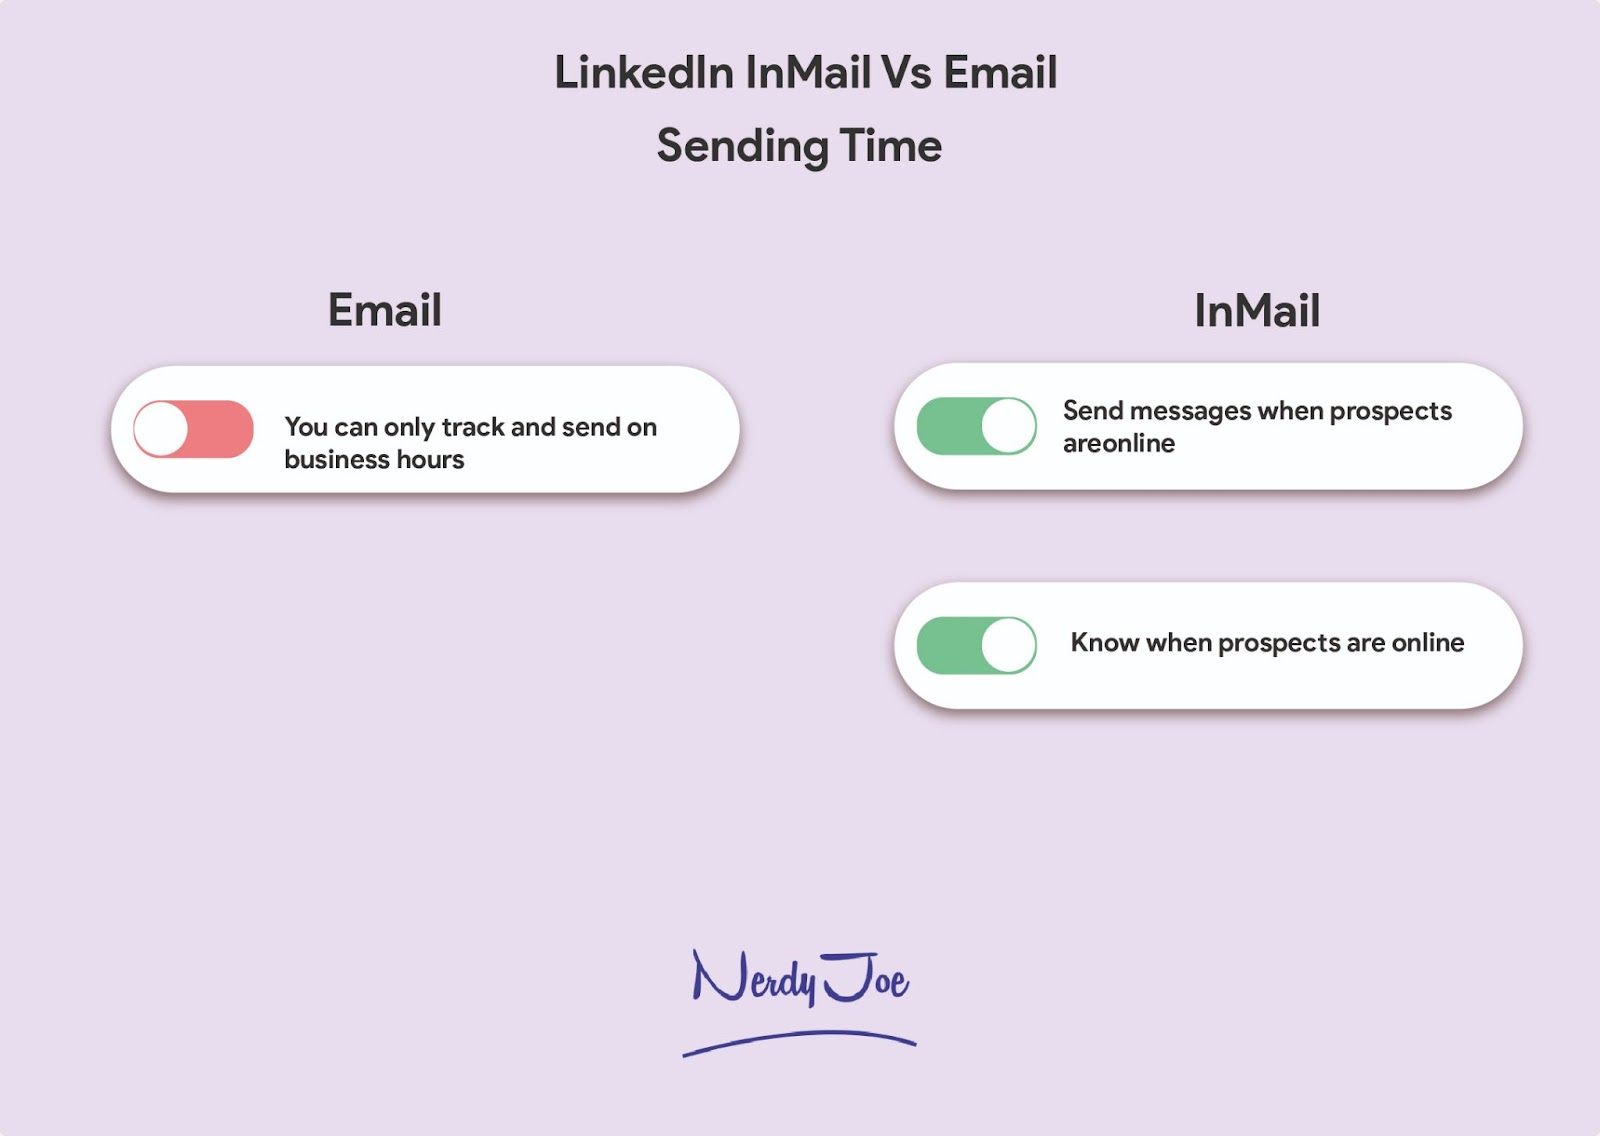 LinkedIn InMail vs Email: Sending Time